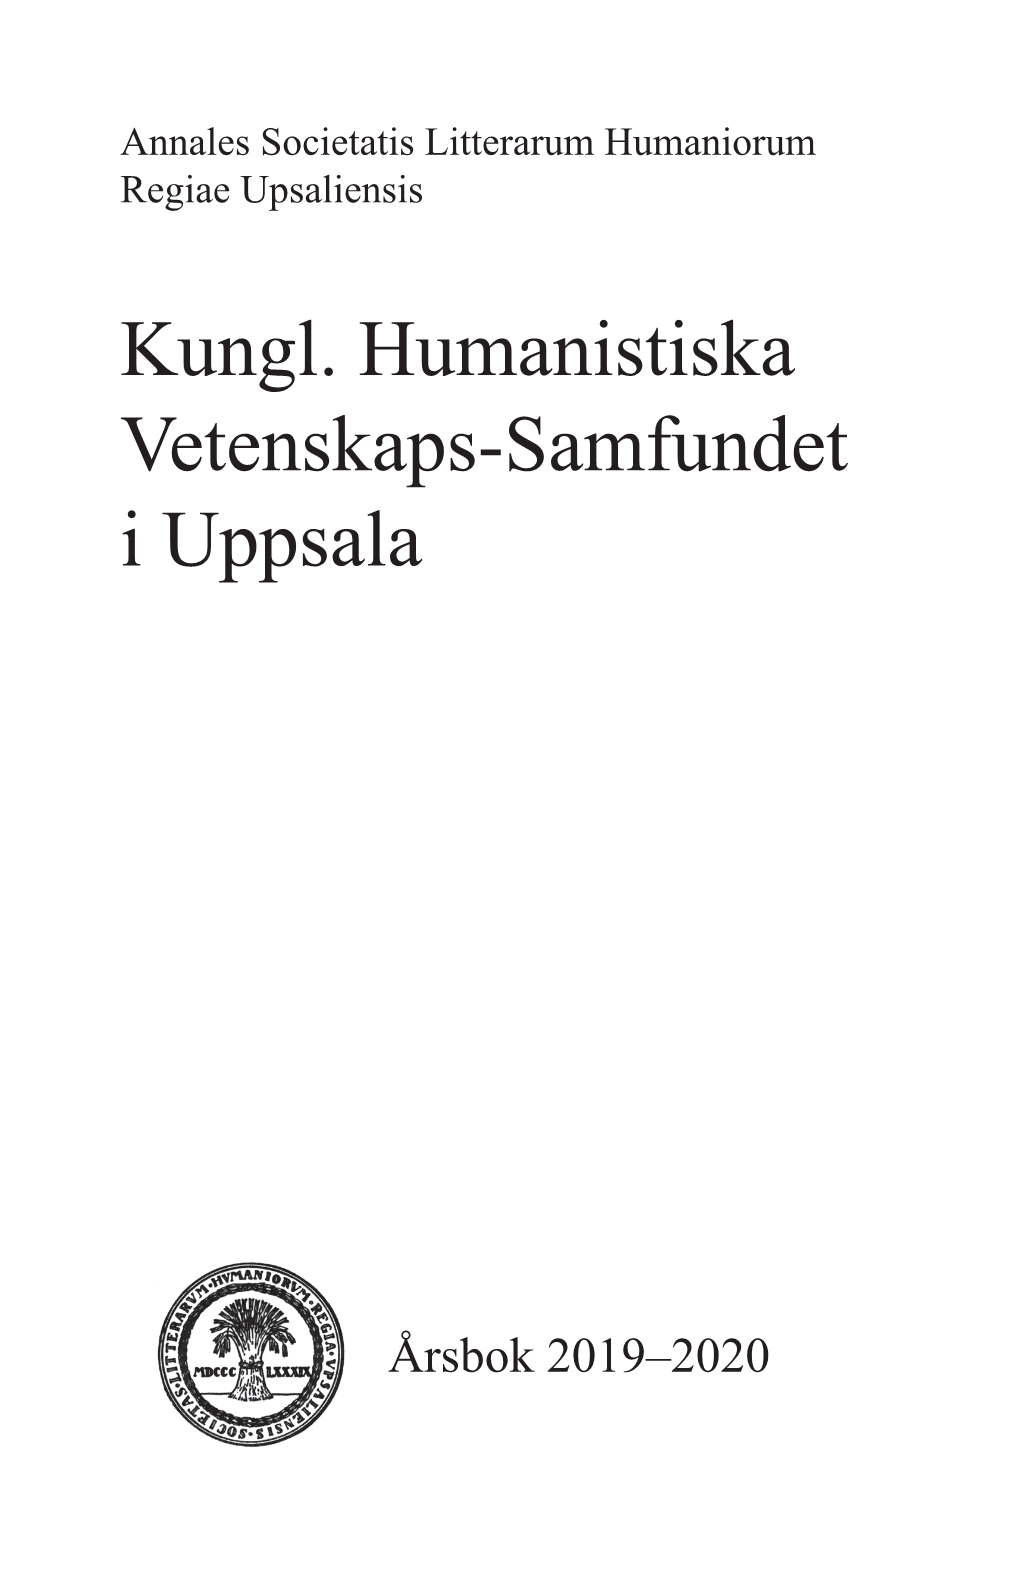 Kungl. Humanistiska Vetenskaps-Samfundet I Uppsala